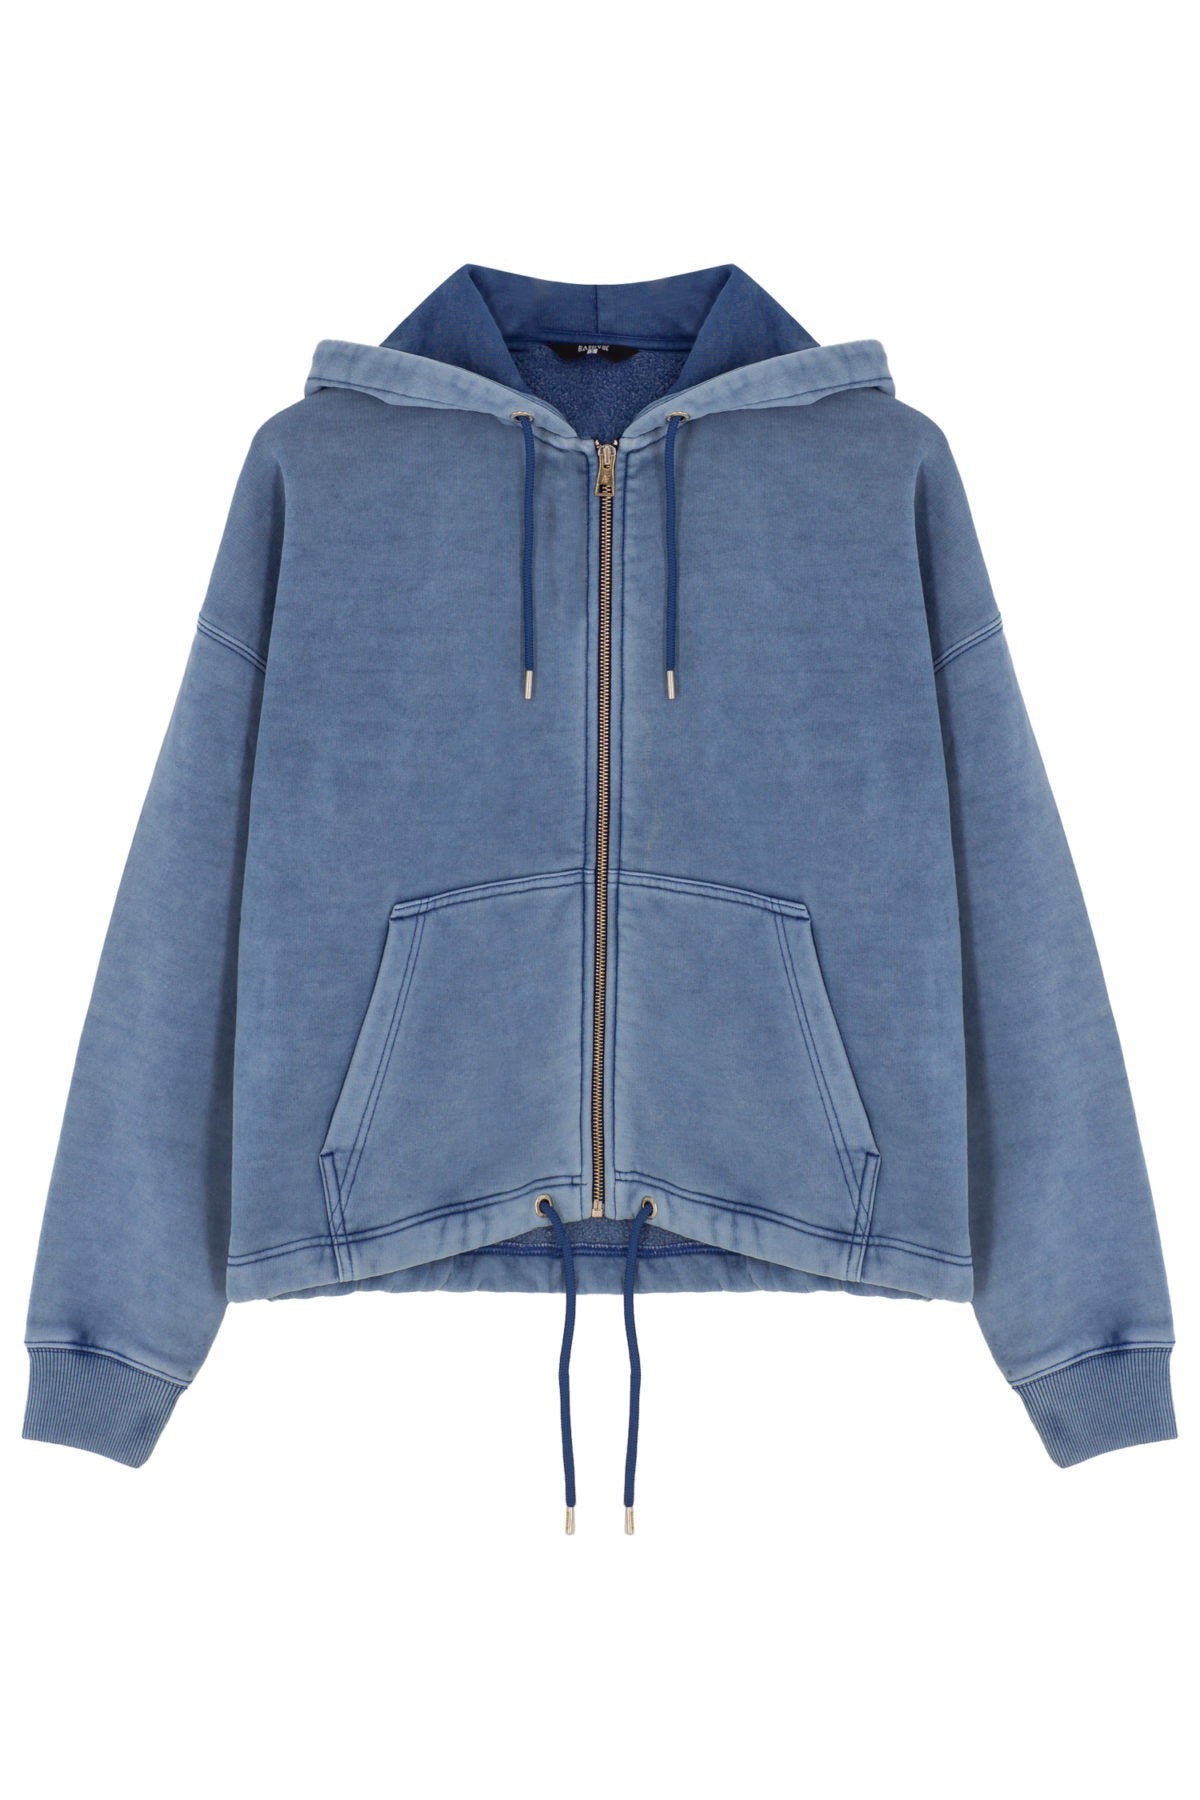 Cotton Zipper Sweatshirt - Hypo Blue